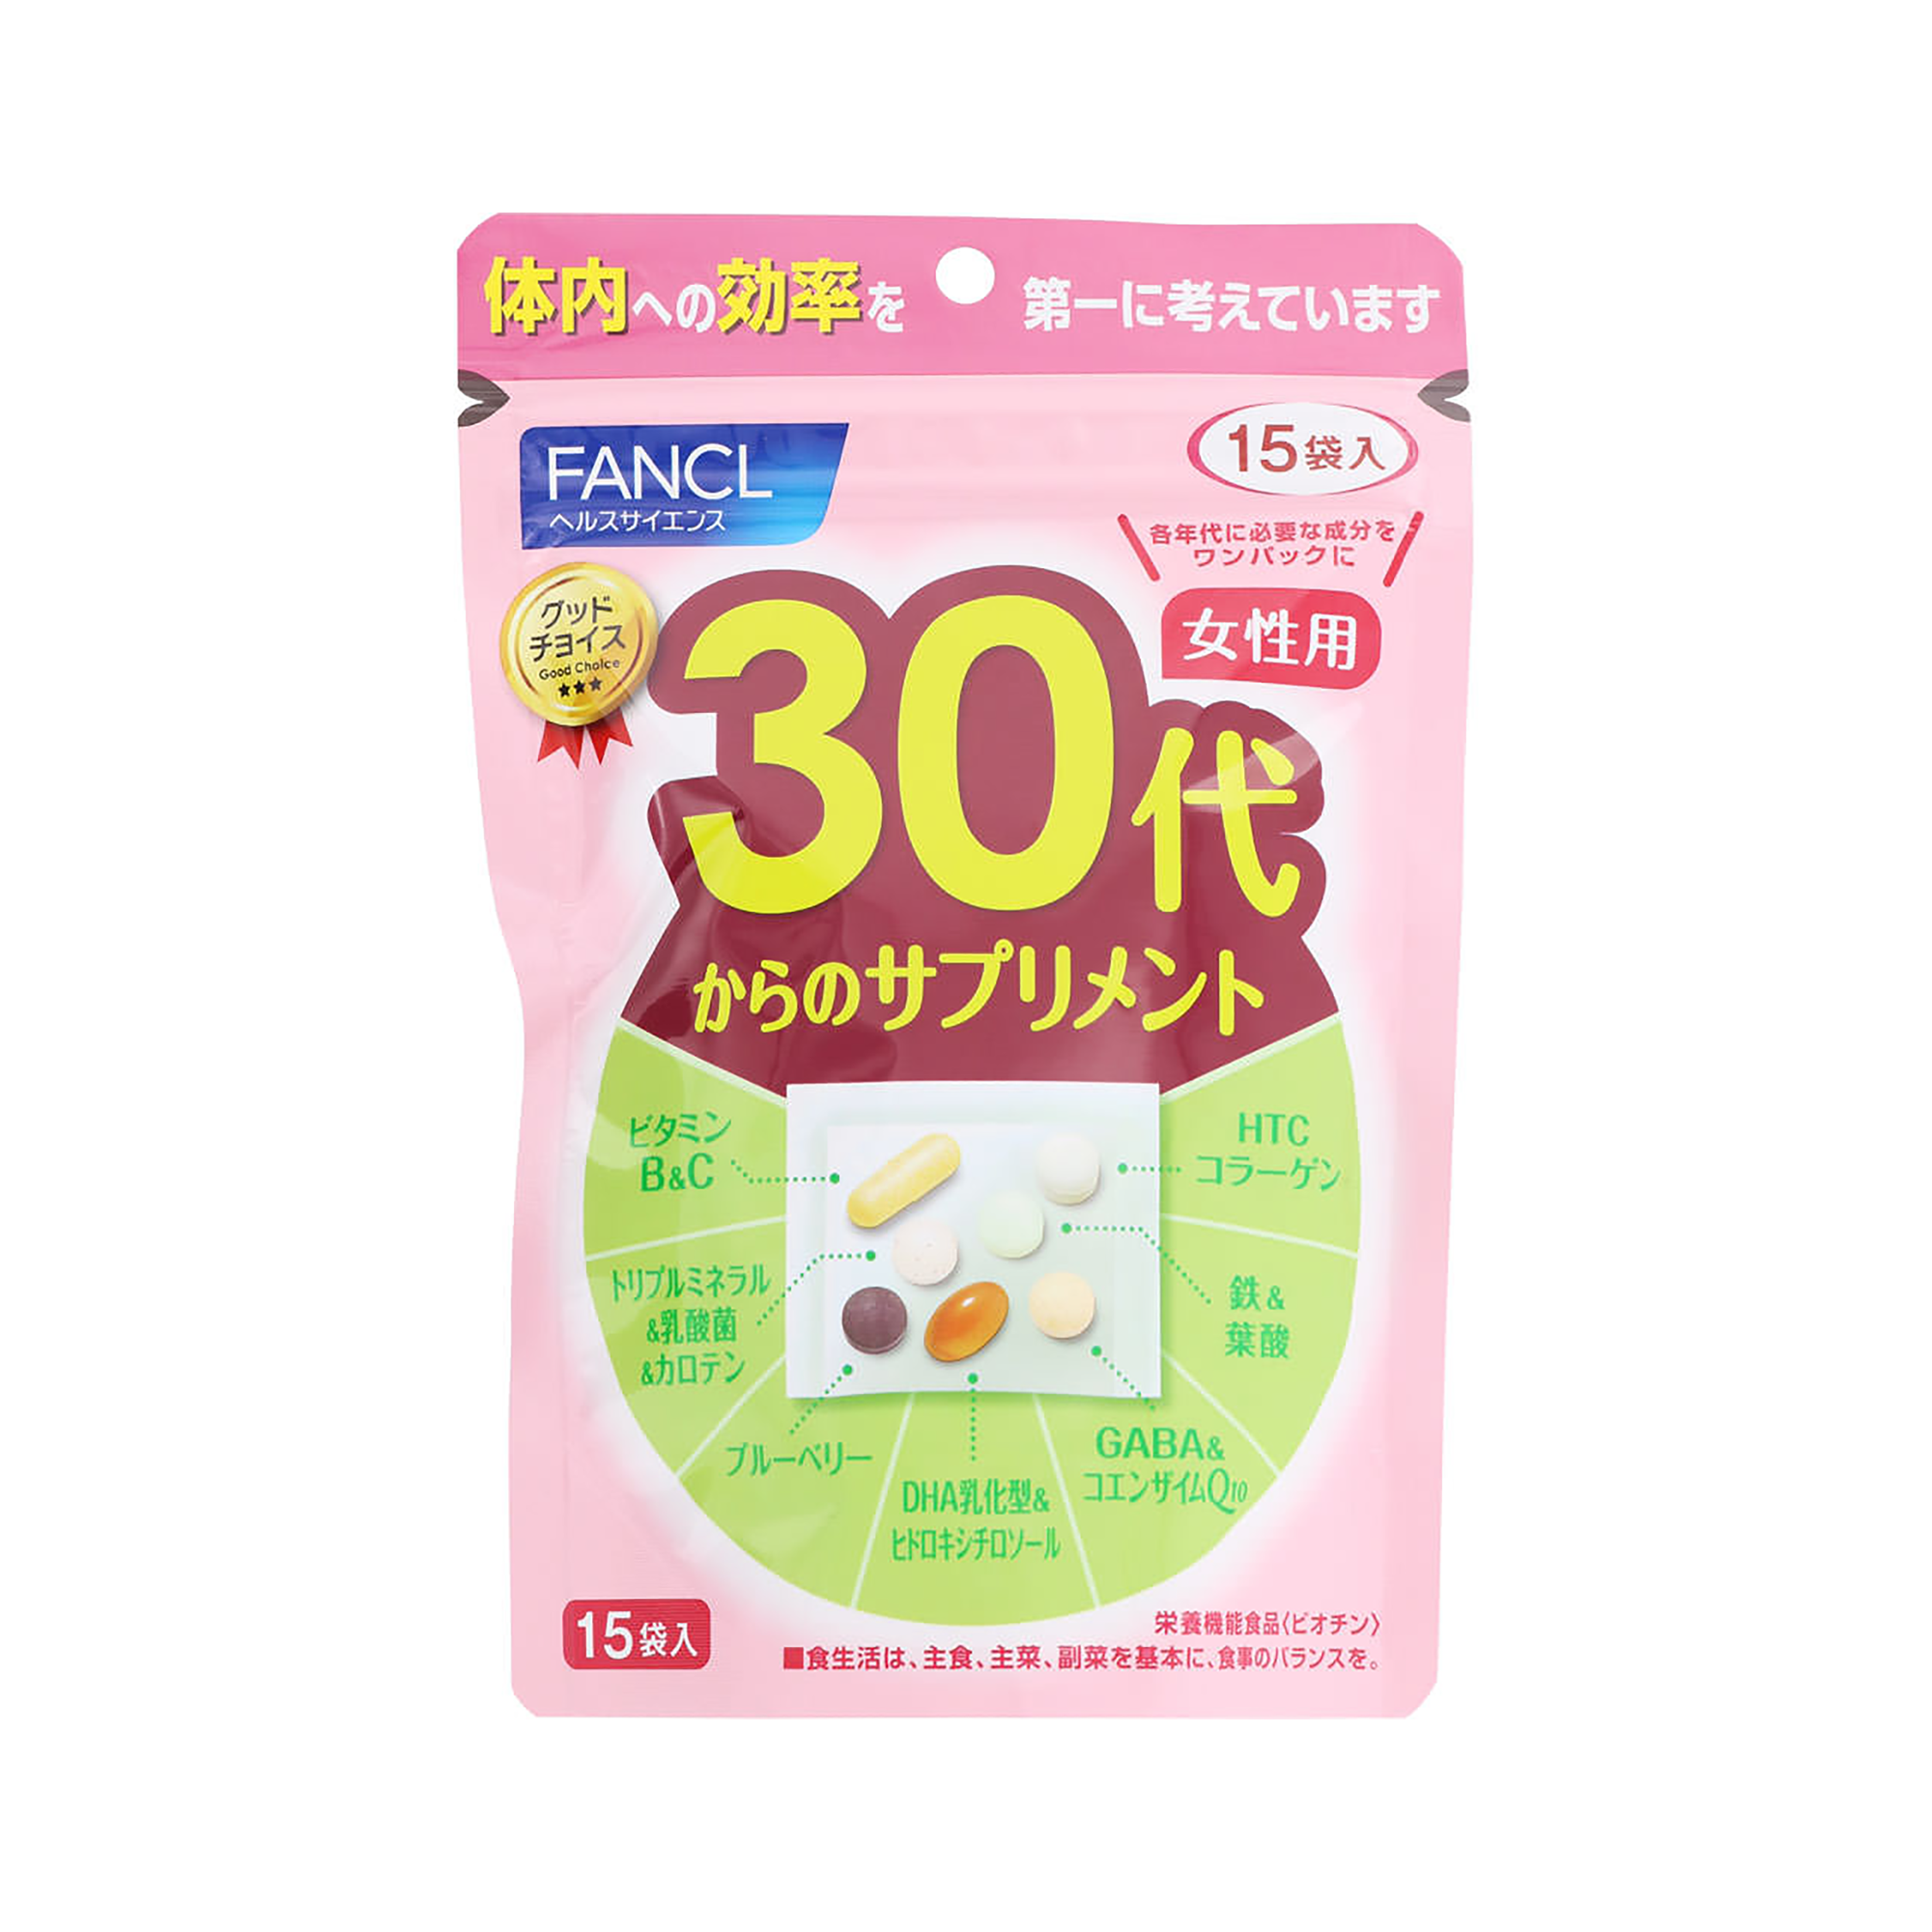 FANCL 30代女性補充劑 7粒×15袋